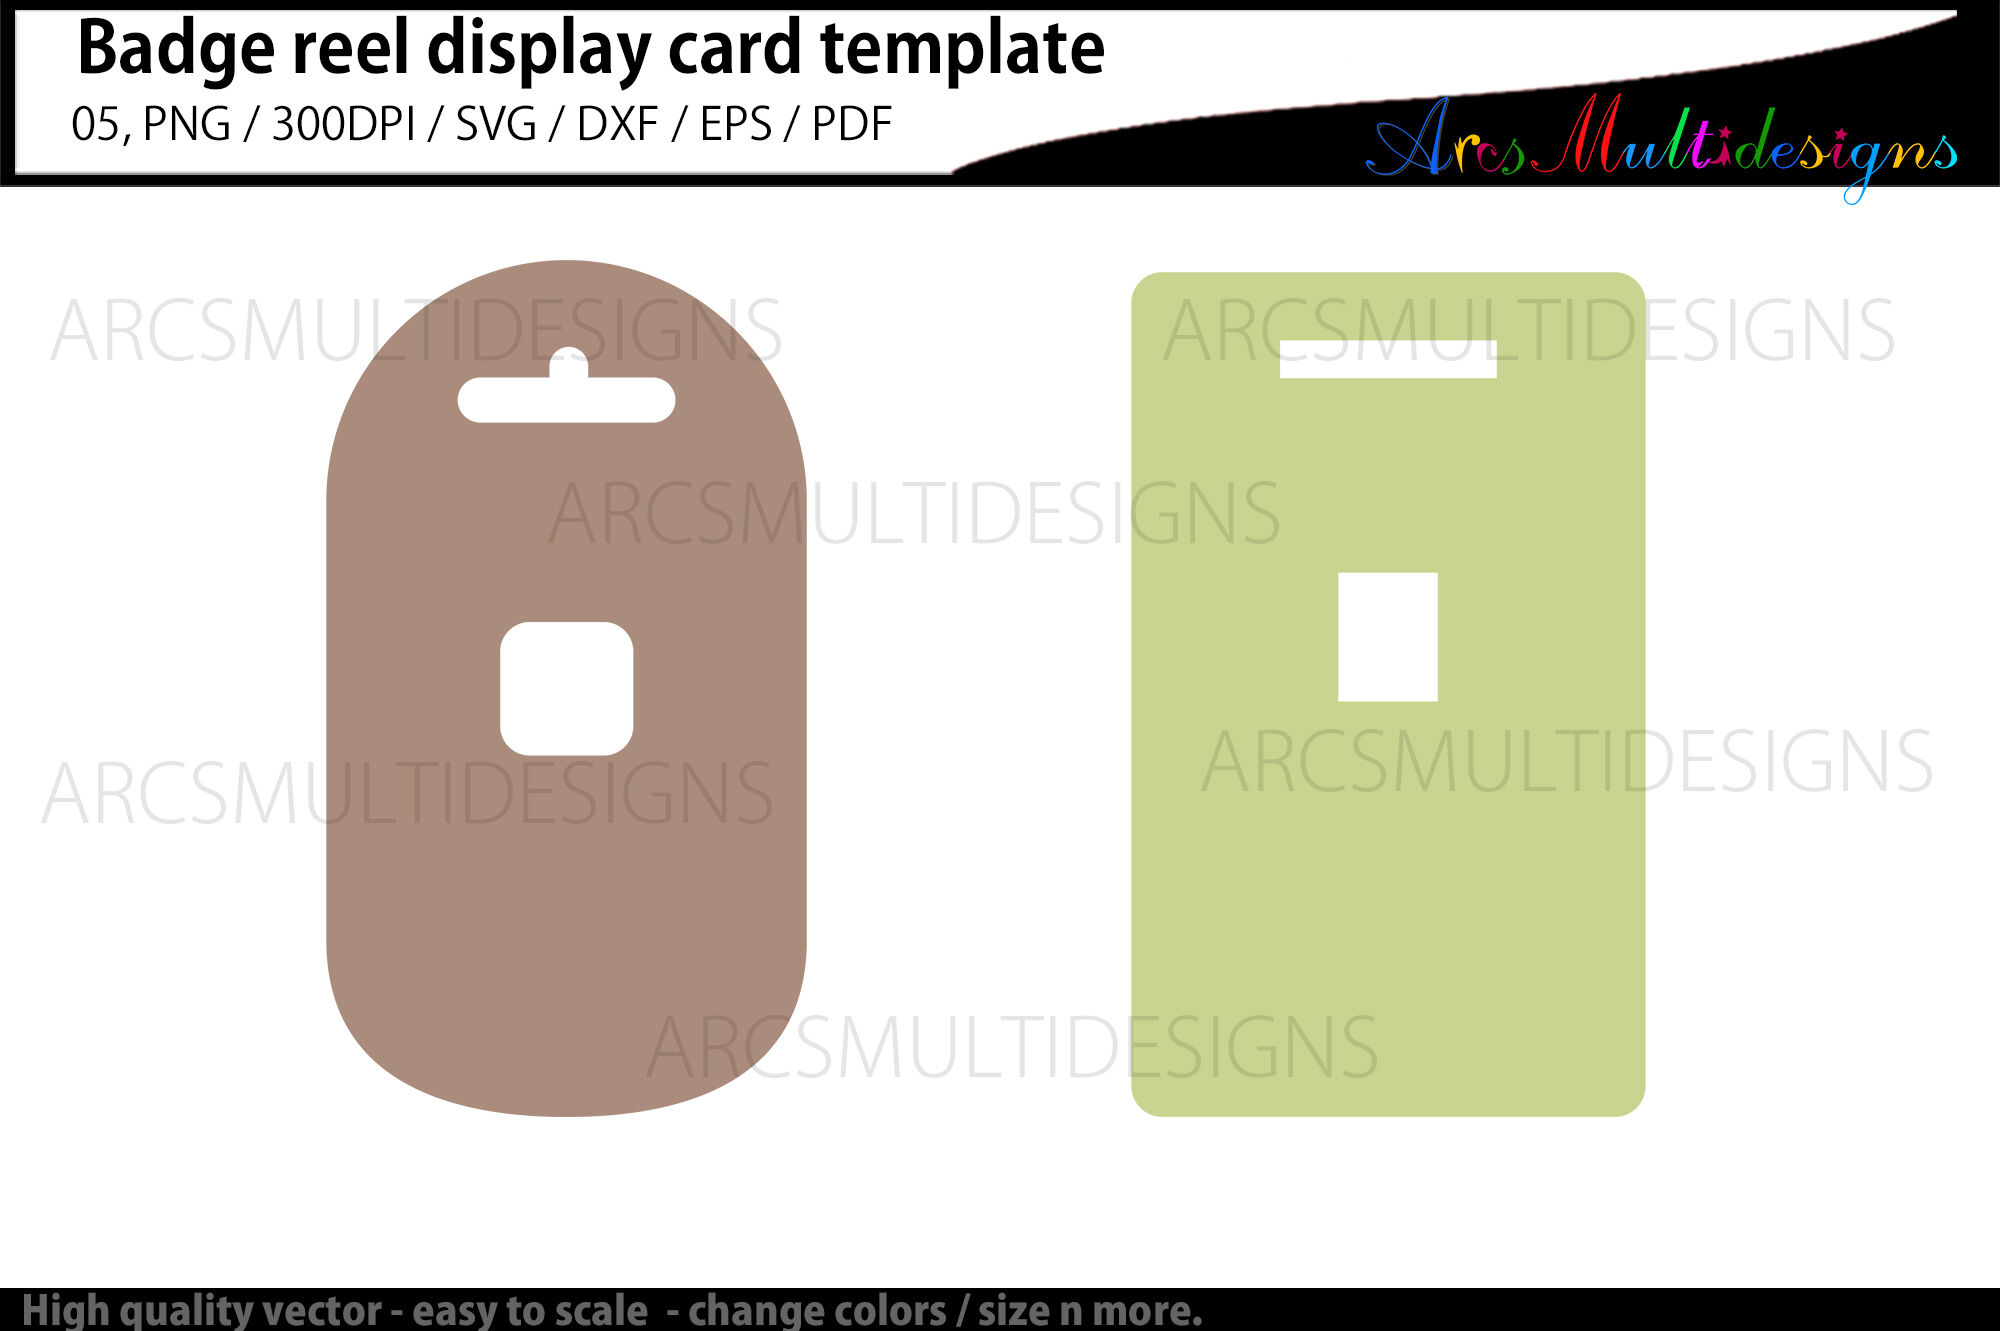 https://media1.thehungryjpeg.com/thumbs2/ori_3890967_dcupcvgx39vl2q6zem55qct2nuxlkj04wsb51umt_retractable-badge-display-card-template.jpg